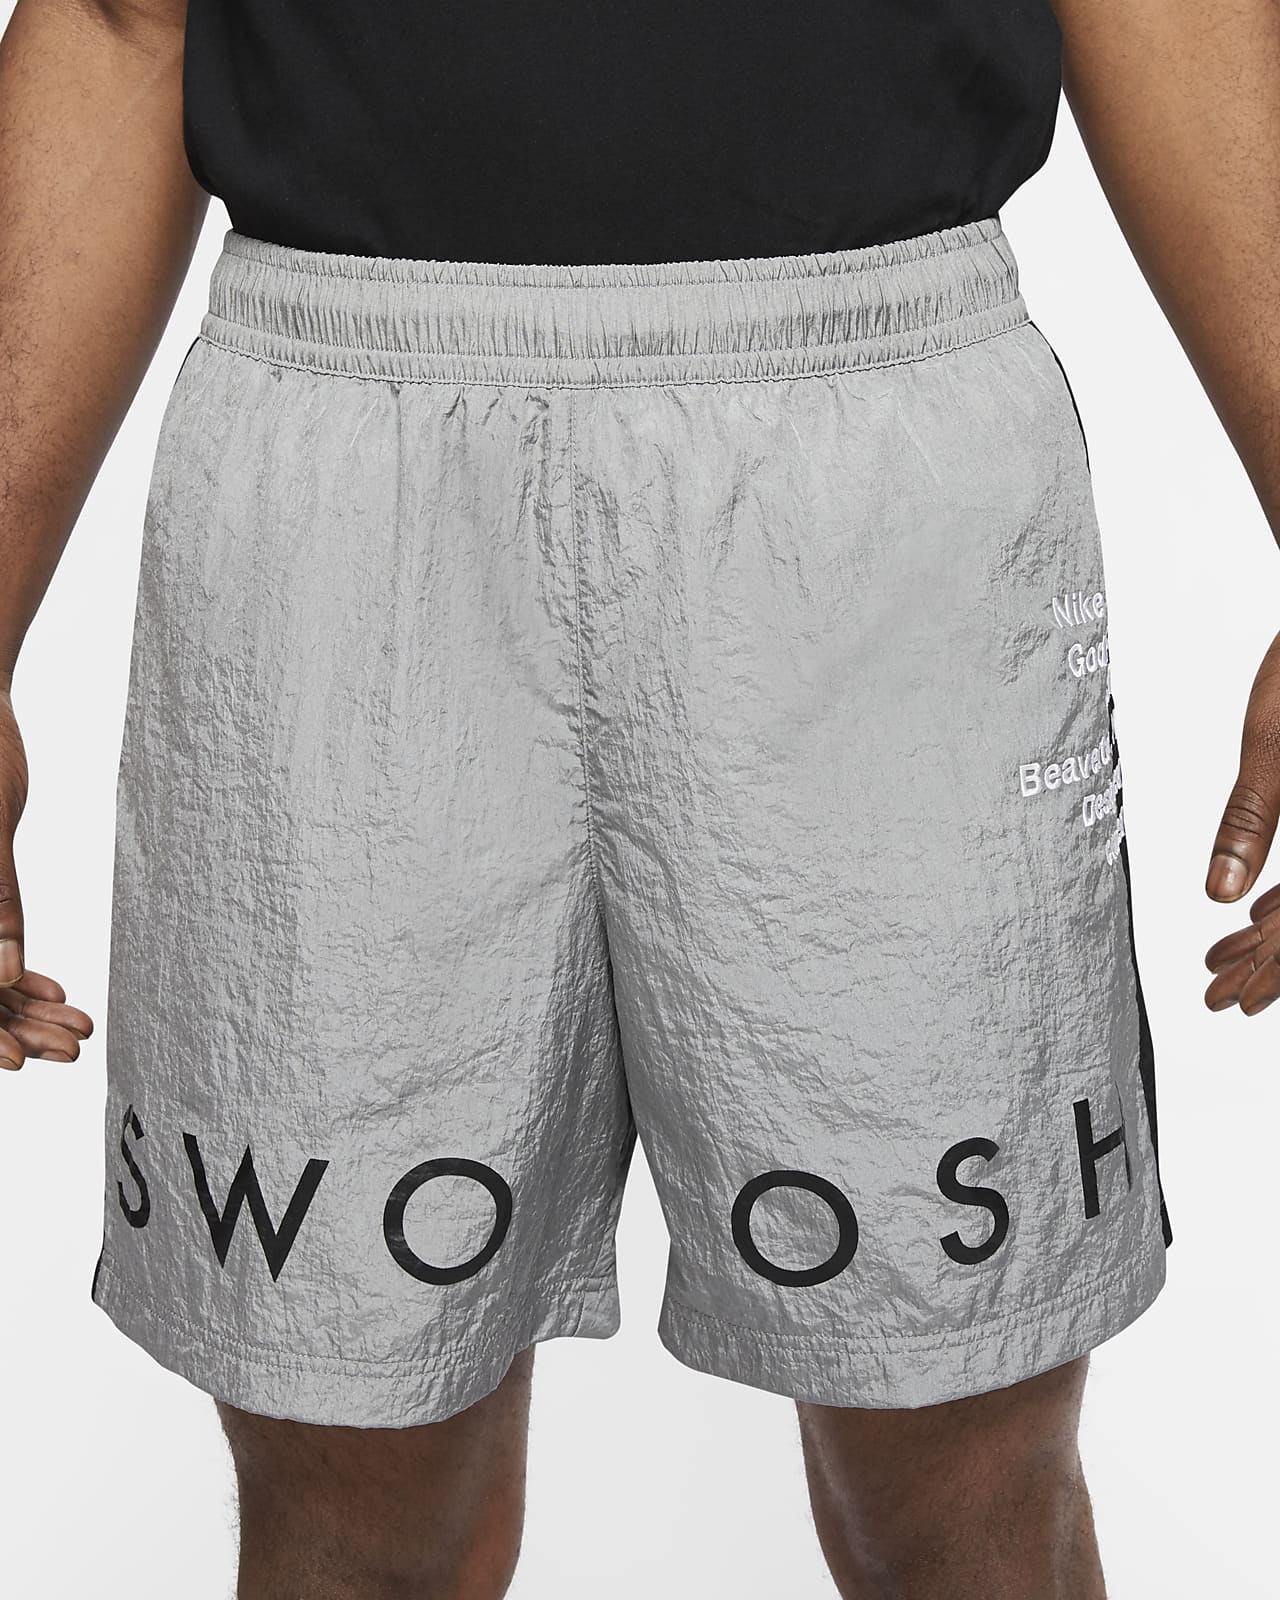 nike grey swoosh shorts